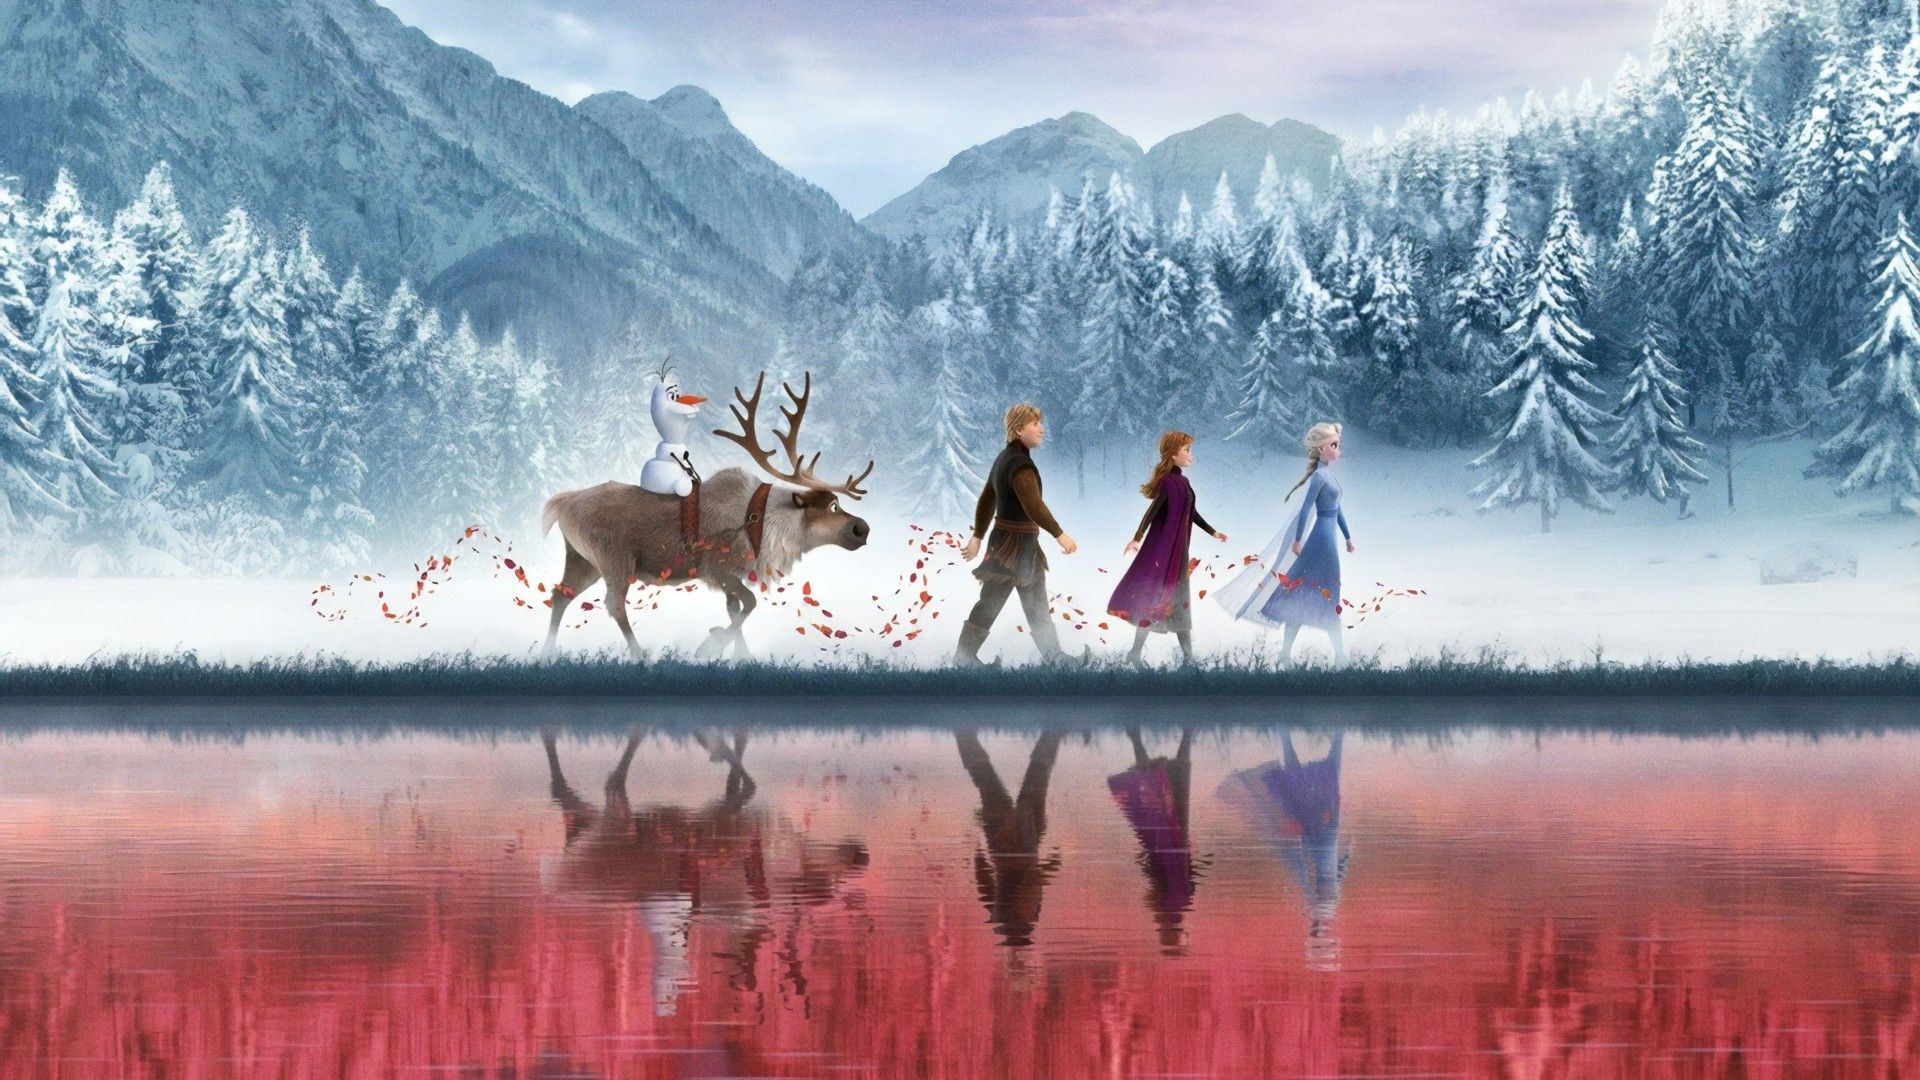 Olaf Sven Elsa Anna And Kristoff In Frozen 2 Movie Background Frozen 2 HD Wallpaper